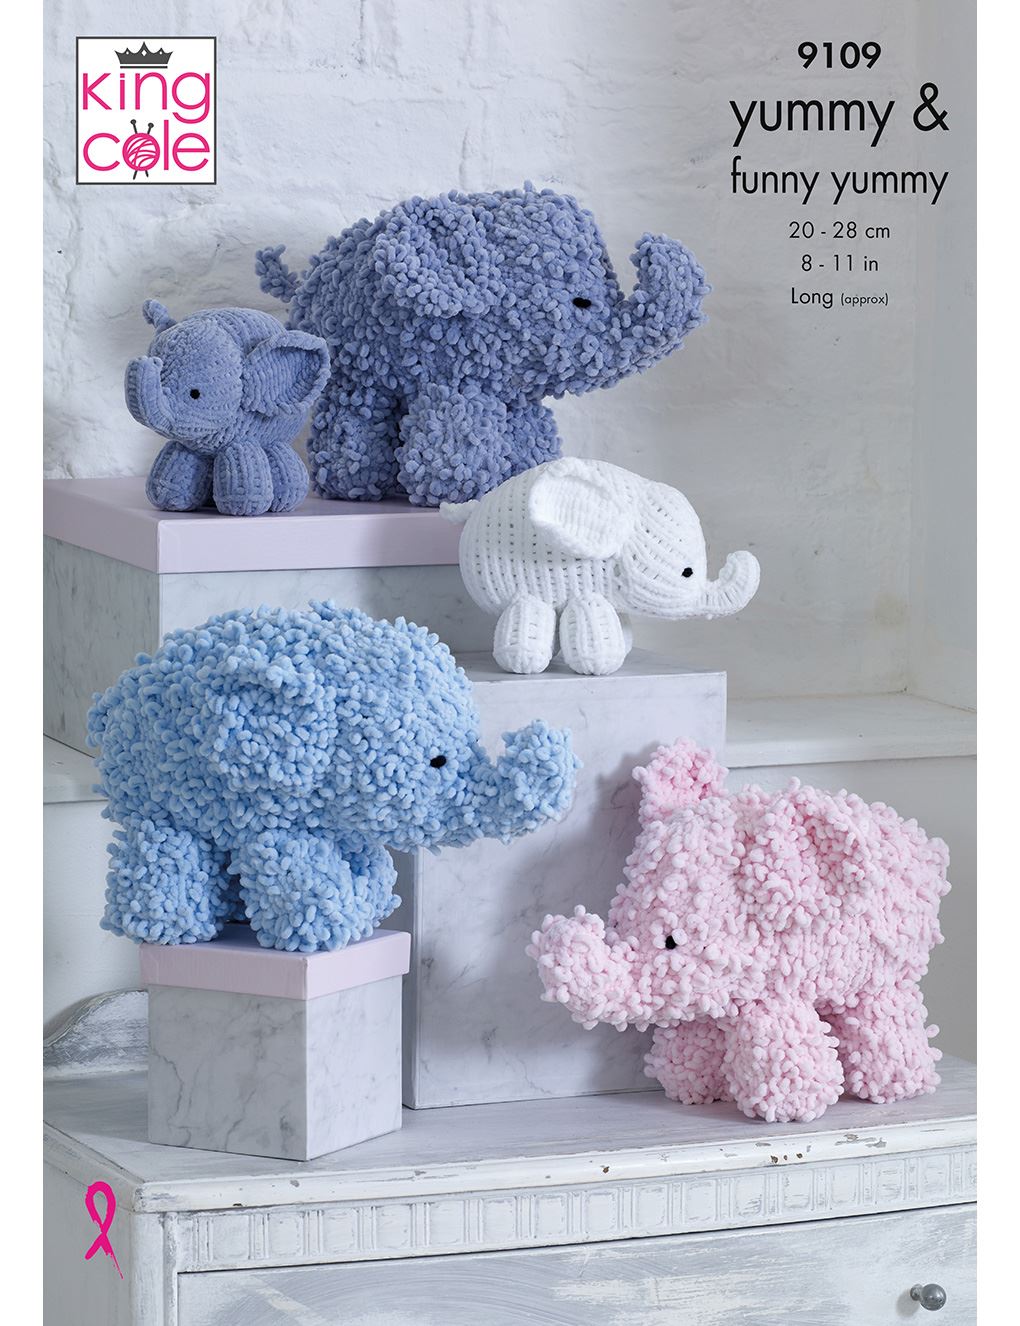 King Cole Funny Yummy & Yummy knitting pattern (9109) elephants